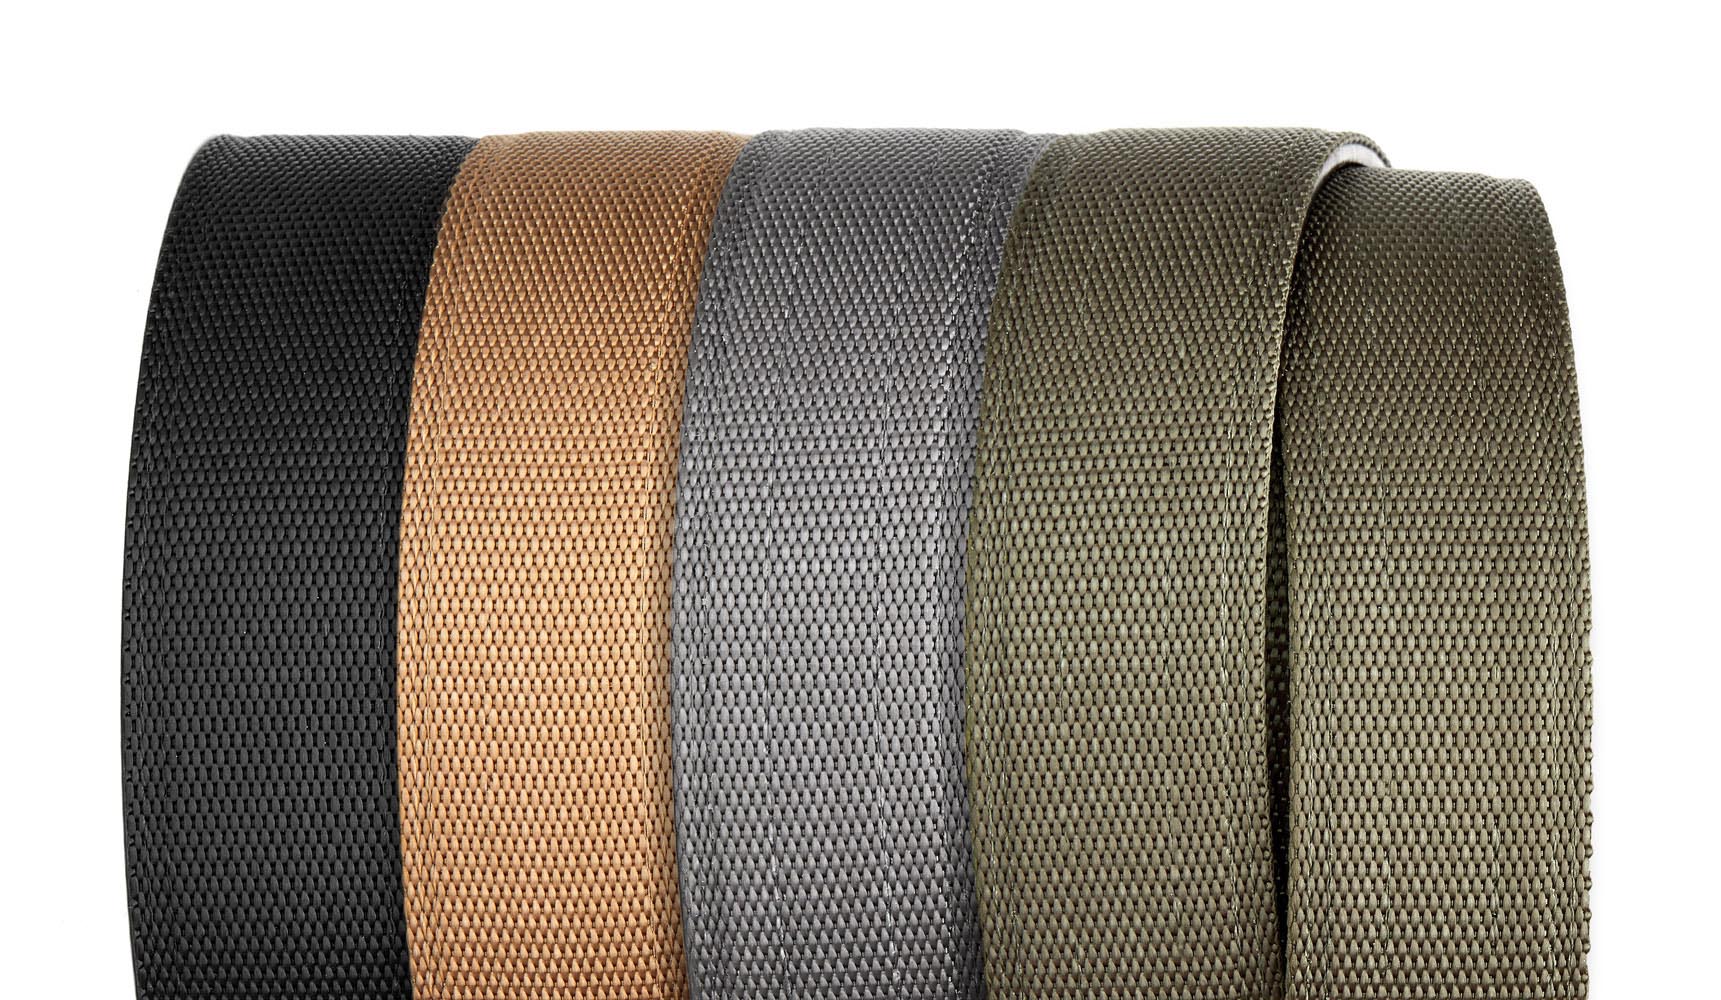 Kore Tactical Gun Belts  Reinforced Nylon Web Belts to support